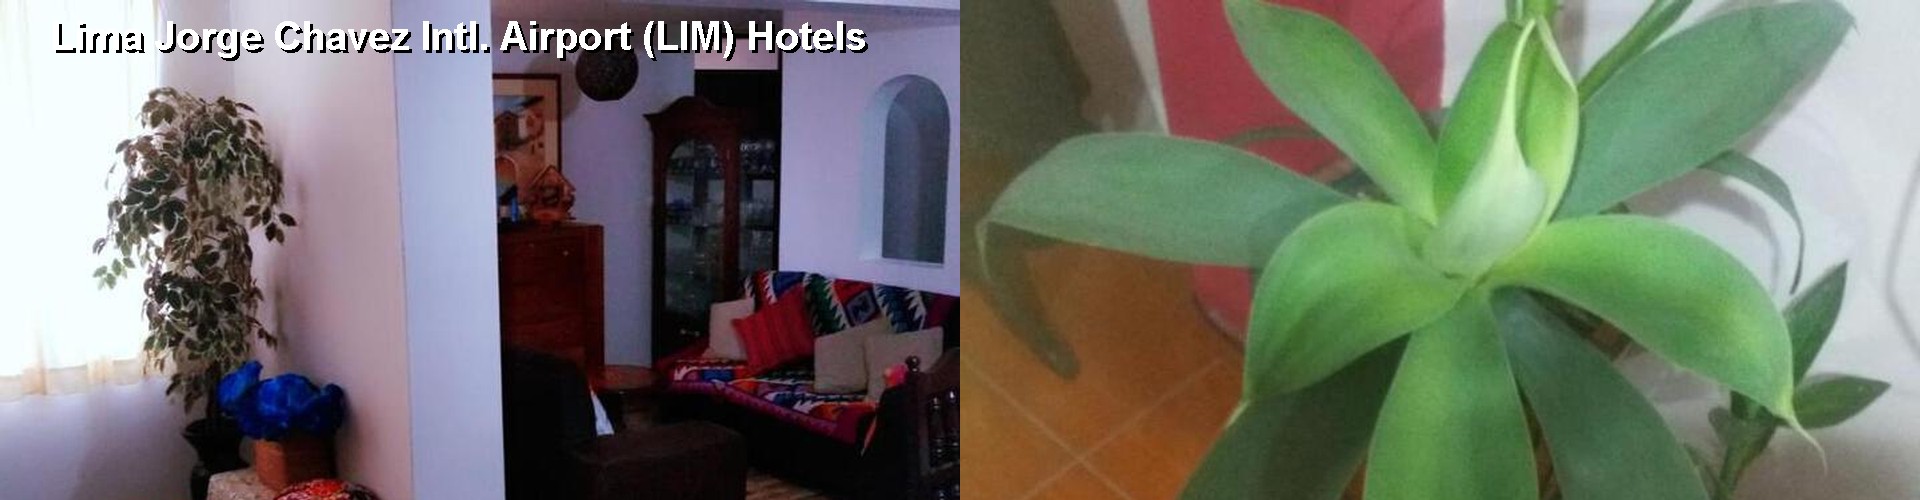 5 Best Hotels near Lima Jorge Chavez Intl. Airport (LIM)